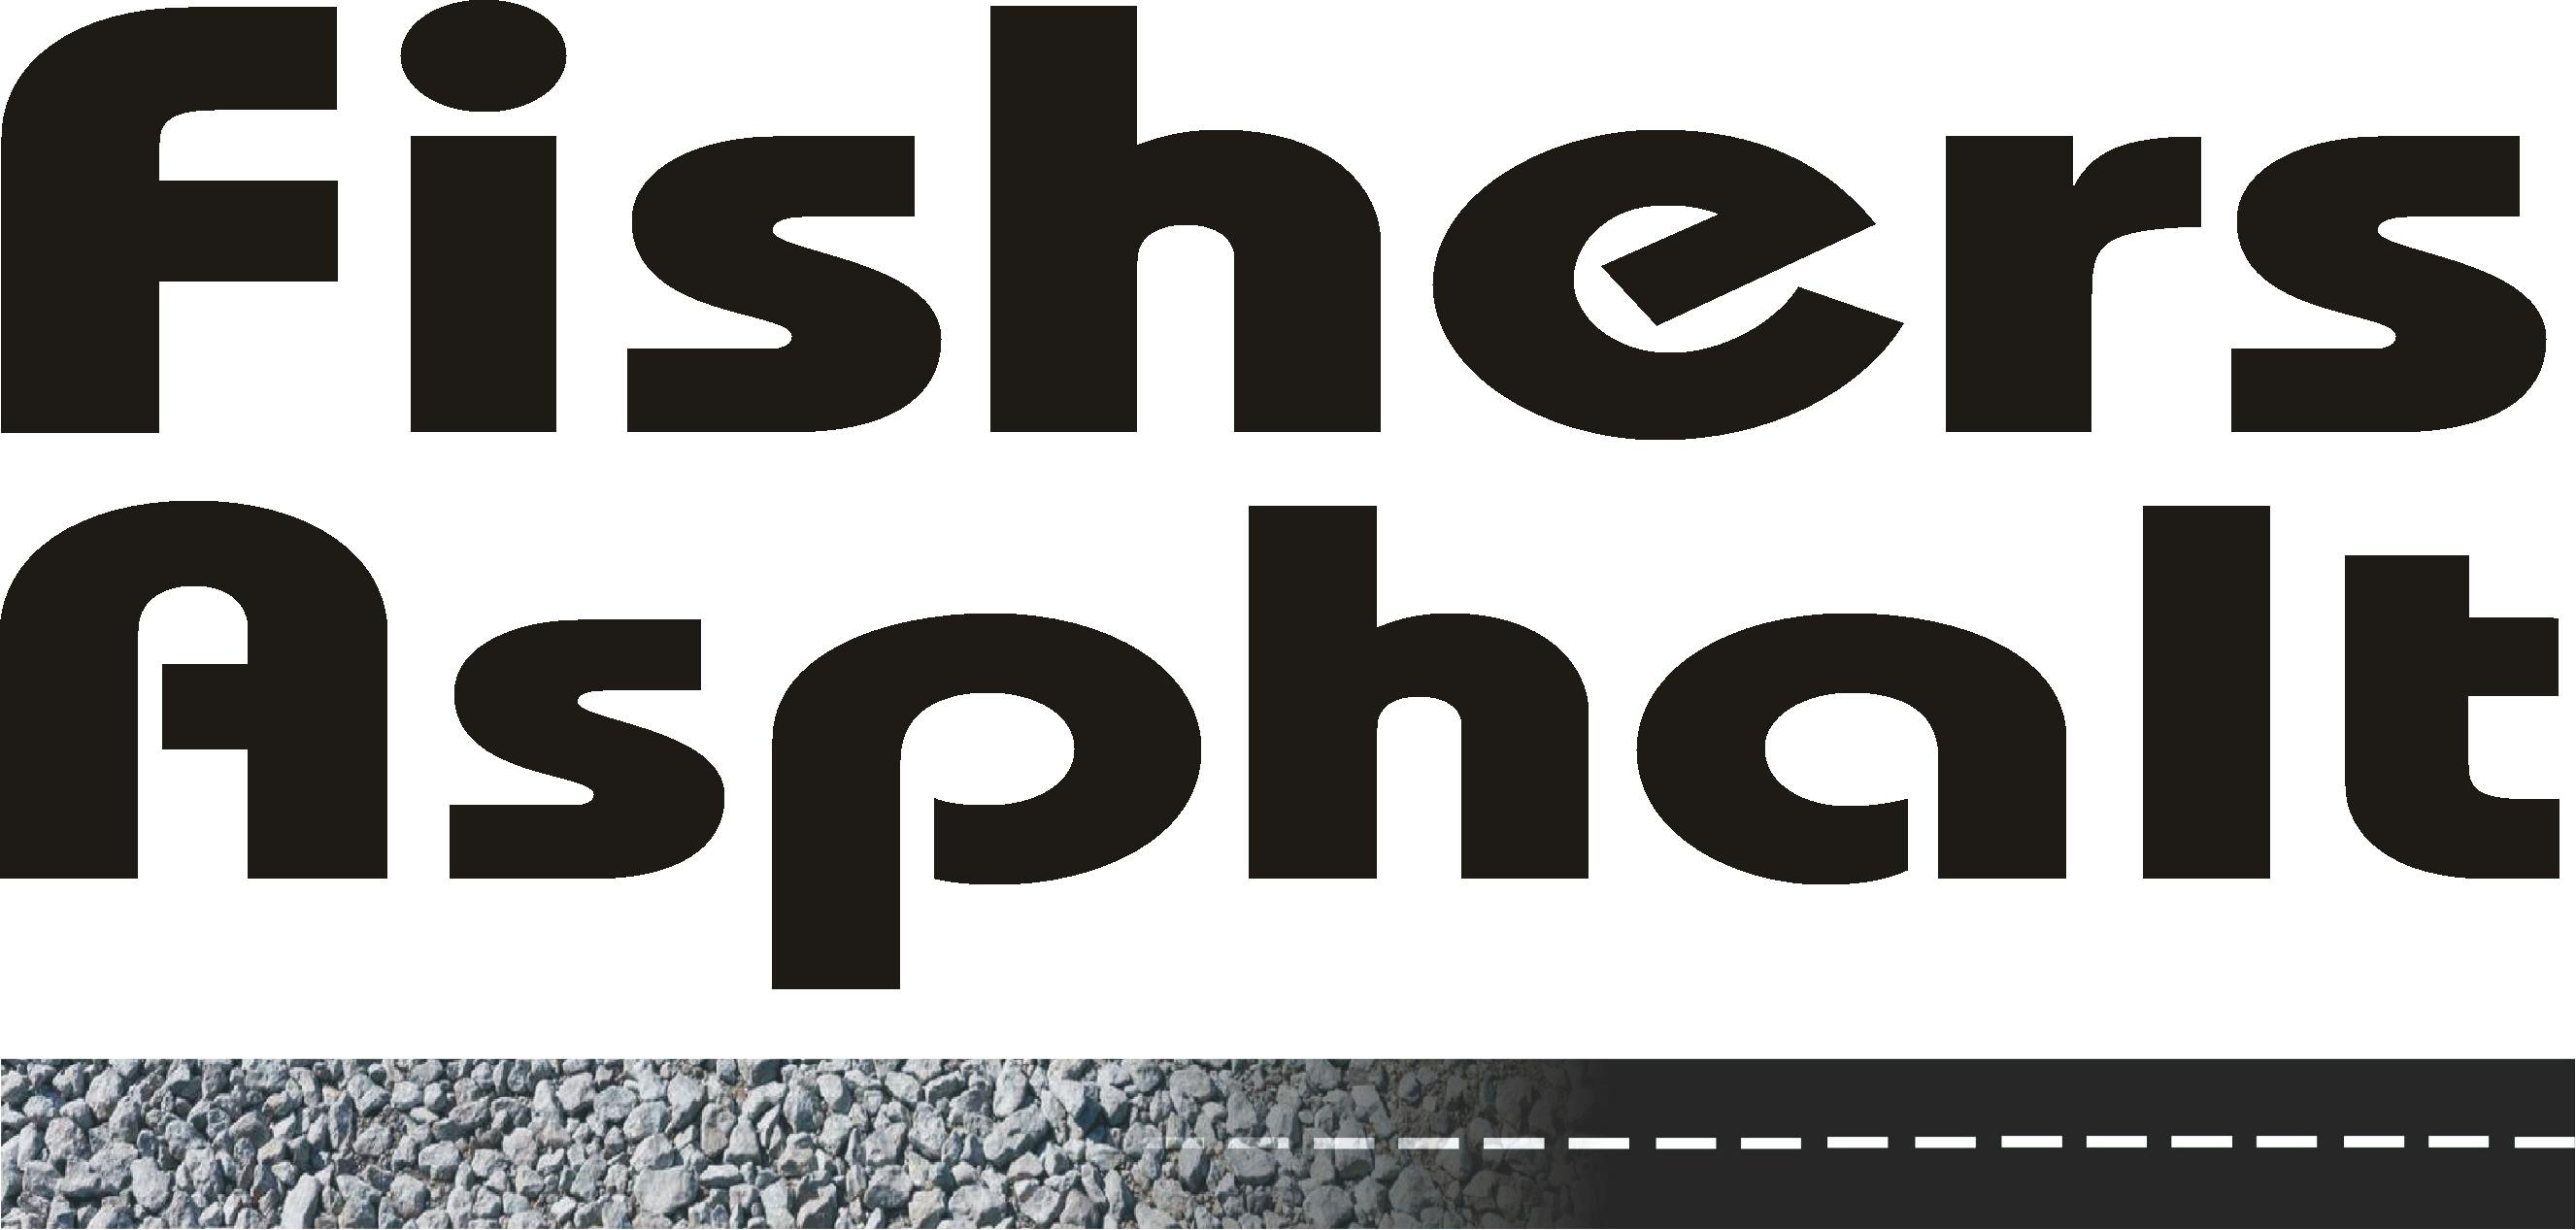 Benchmark Qu Fishers Asphalt logo.jpg